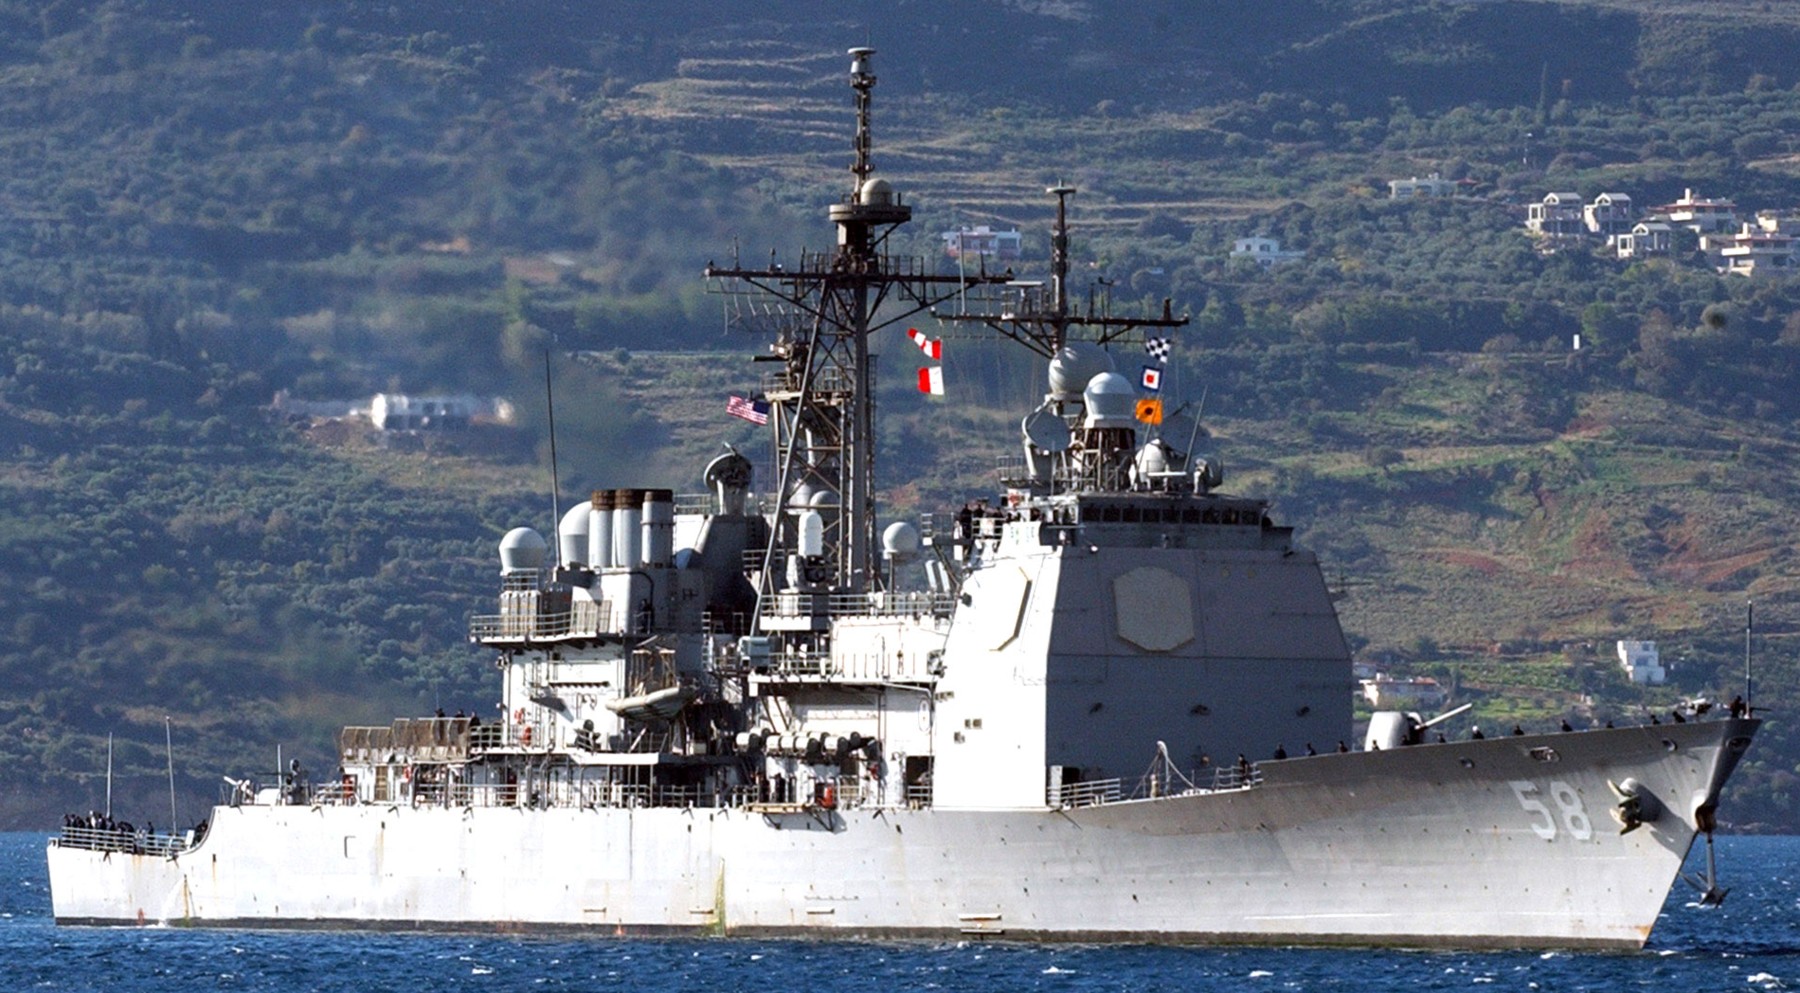 cg-58 uss philippine sea ticonderoga class guided missile cruiser aegis us navy souda bay crete greece 17